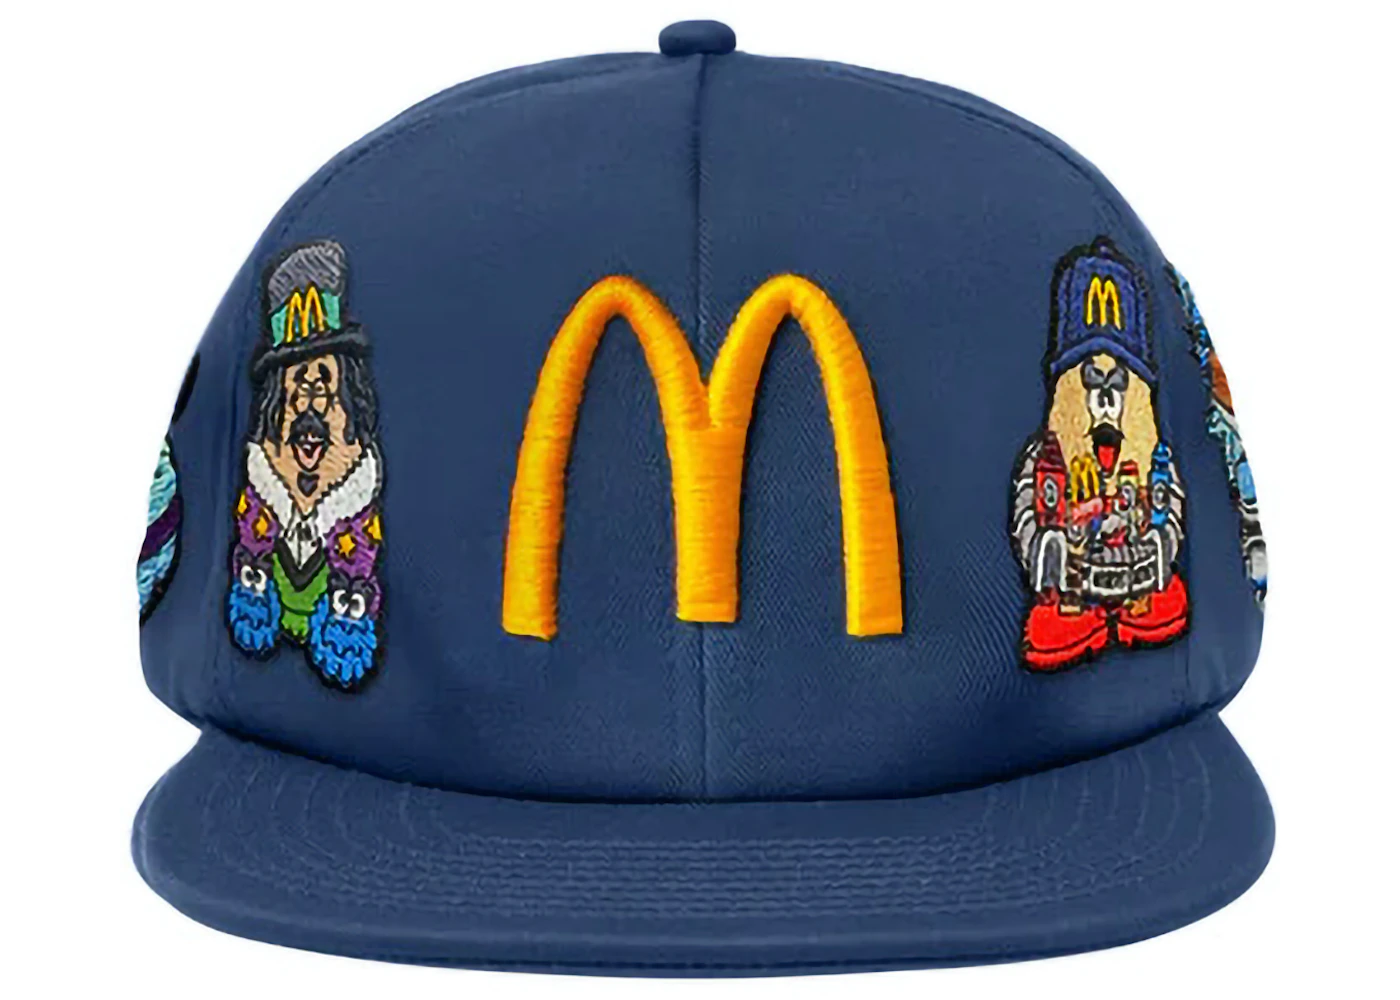 Kerwin Frost x McDonald\'s Uptown Moe Logo Fitted Cap Navy - FW23 - US